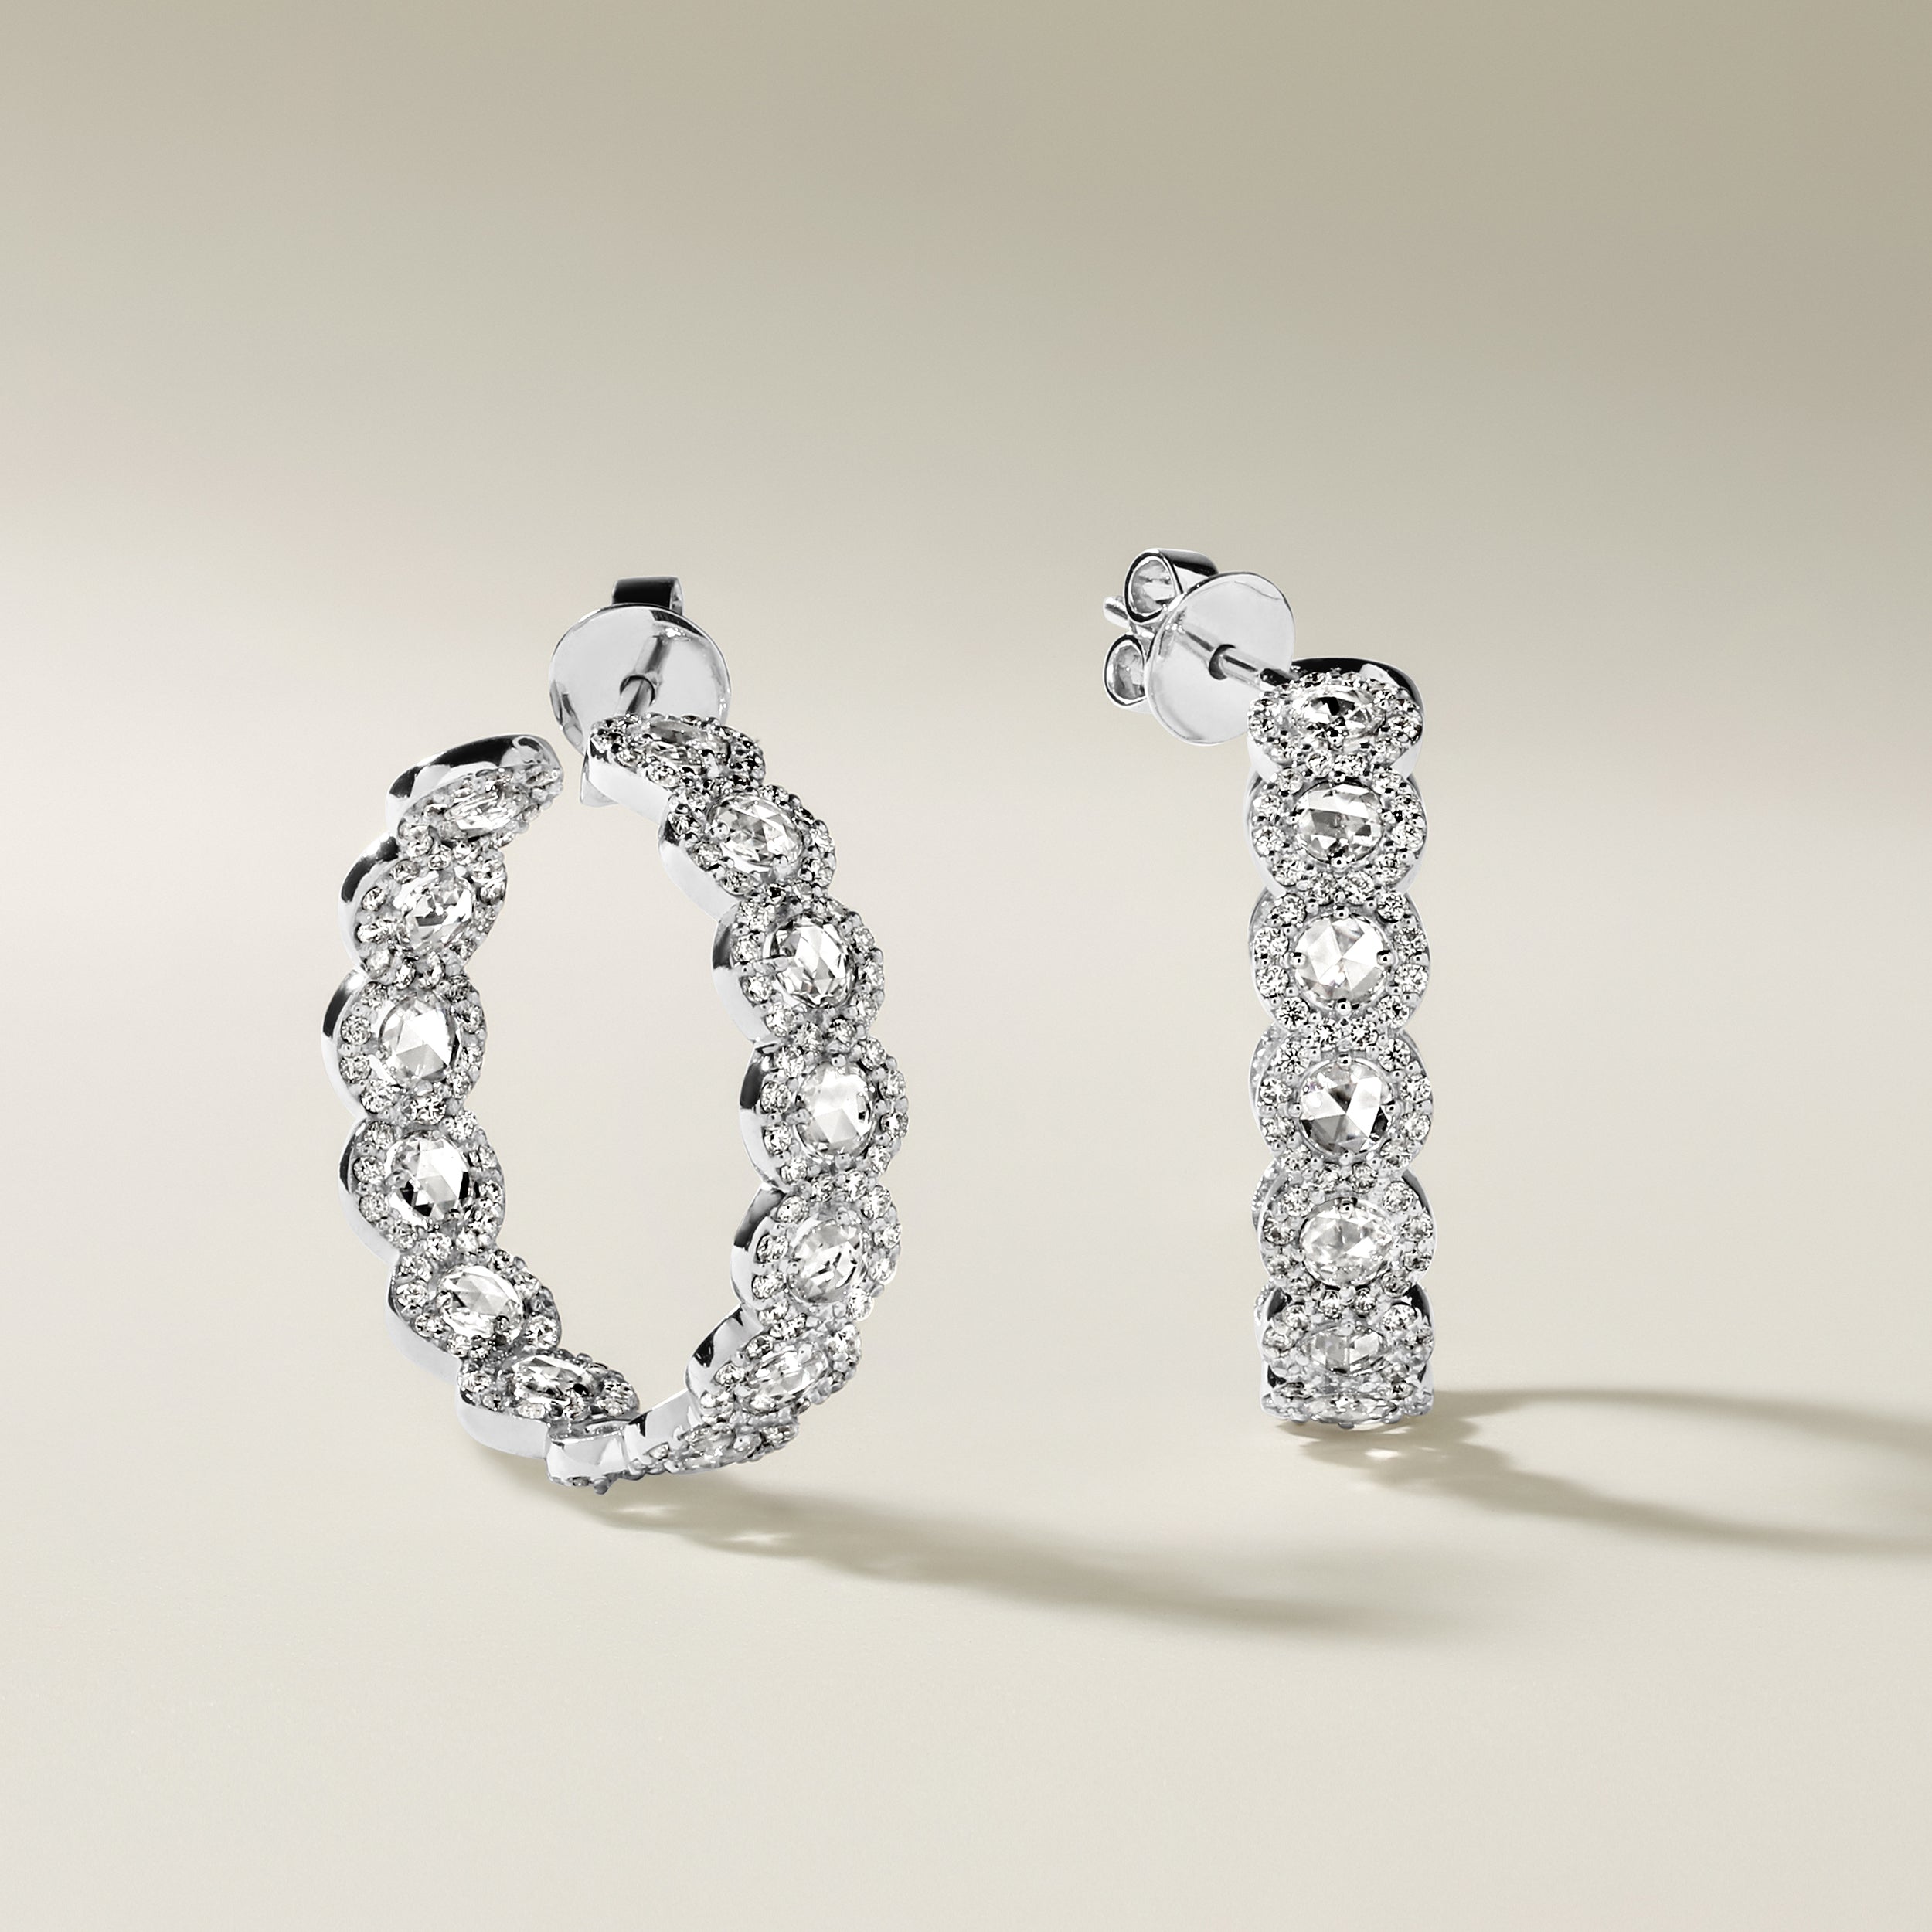 Certified 18K Gold 4ct Natural Diamond E-VVS Rose-Cut Inside Out Hoop White Earrings